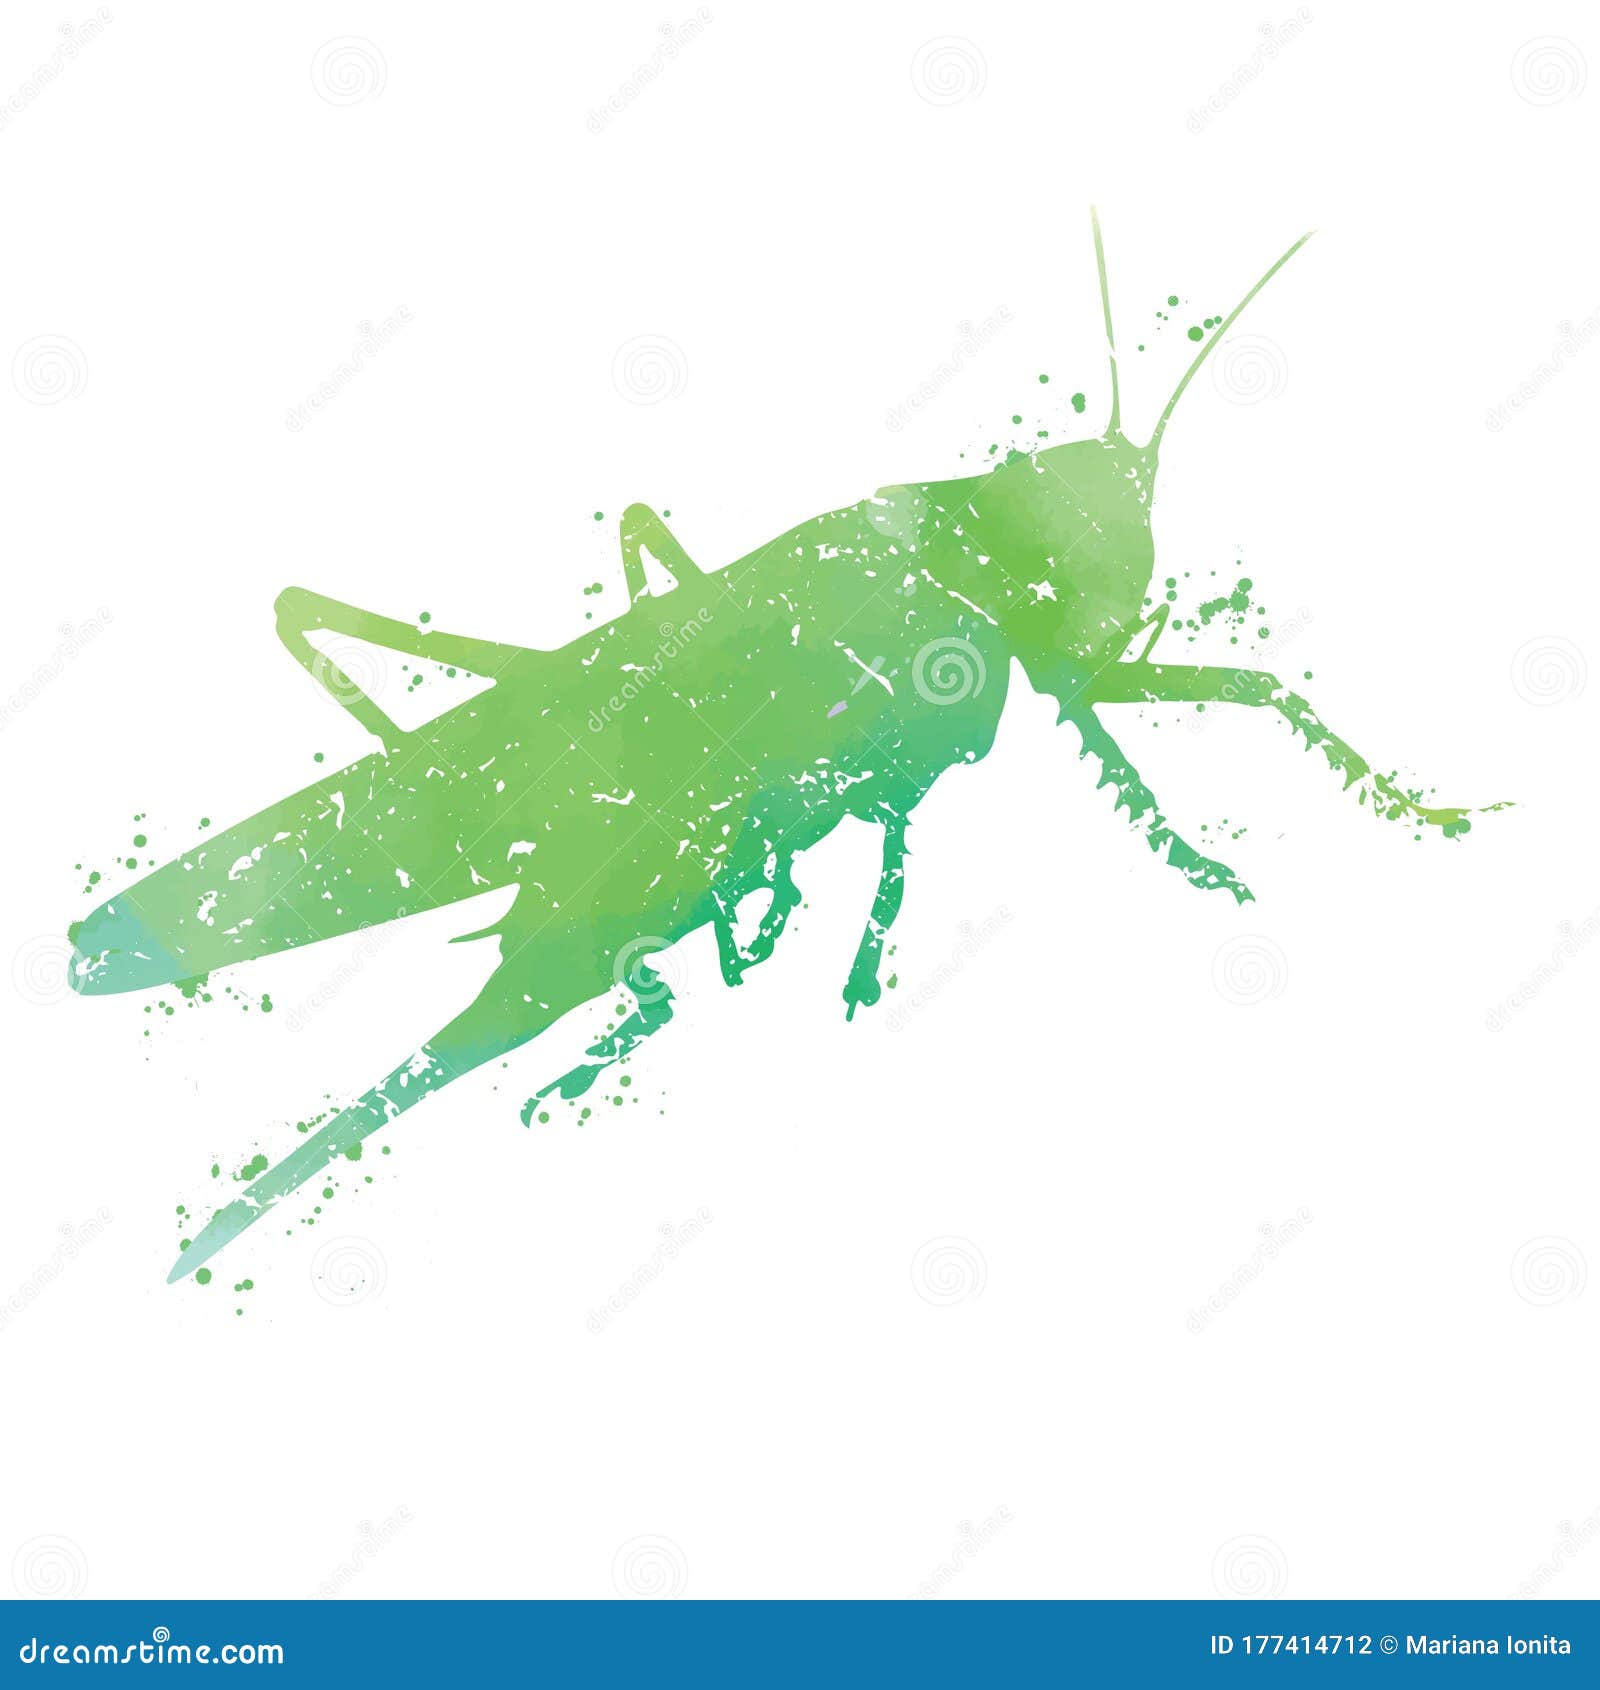 grasshoper - watercolor texture on white background